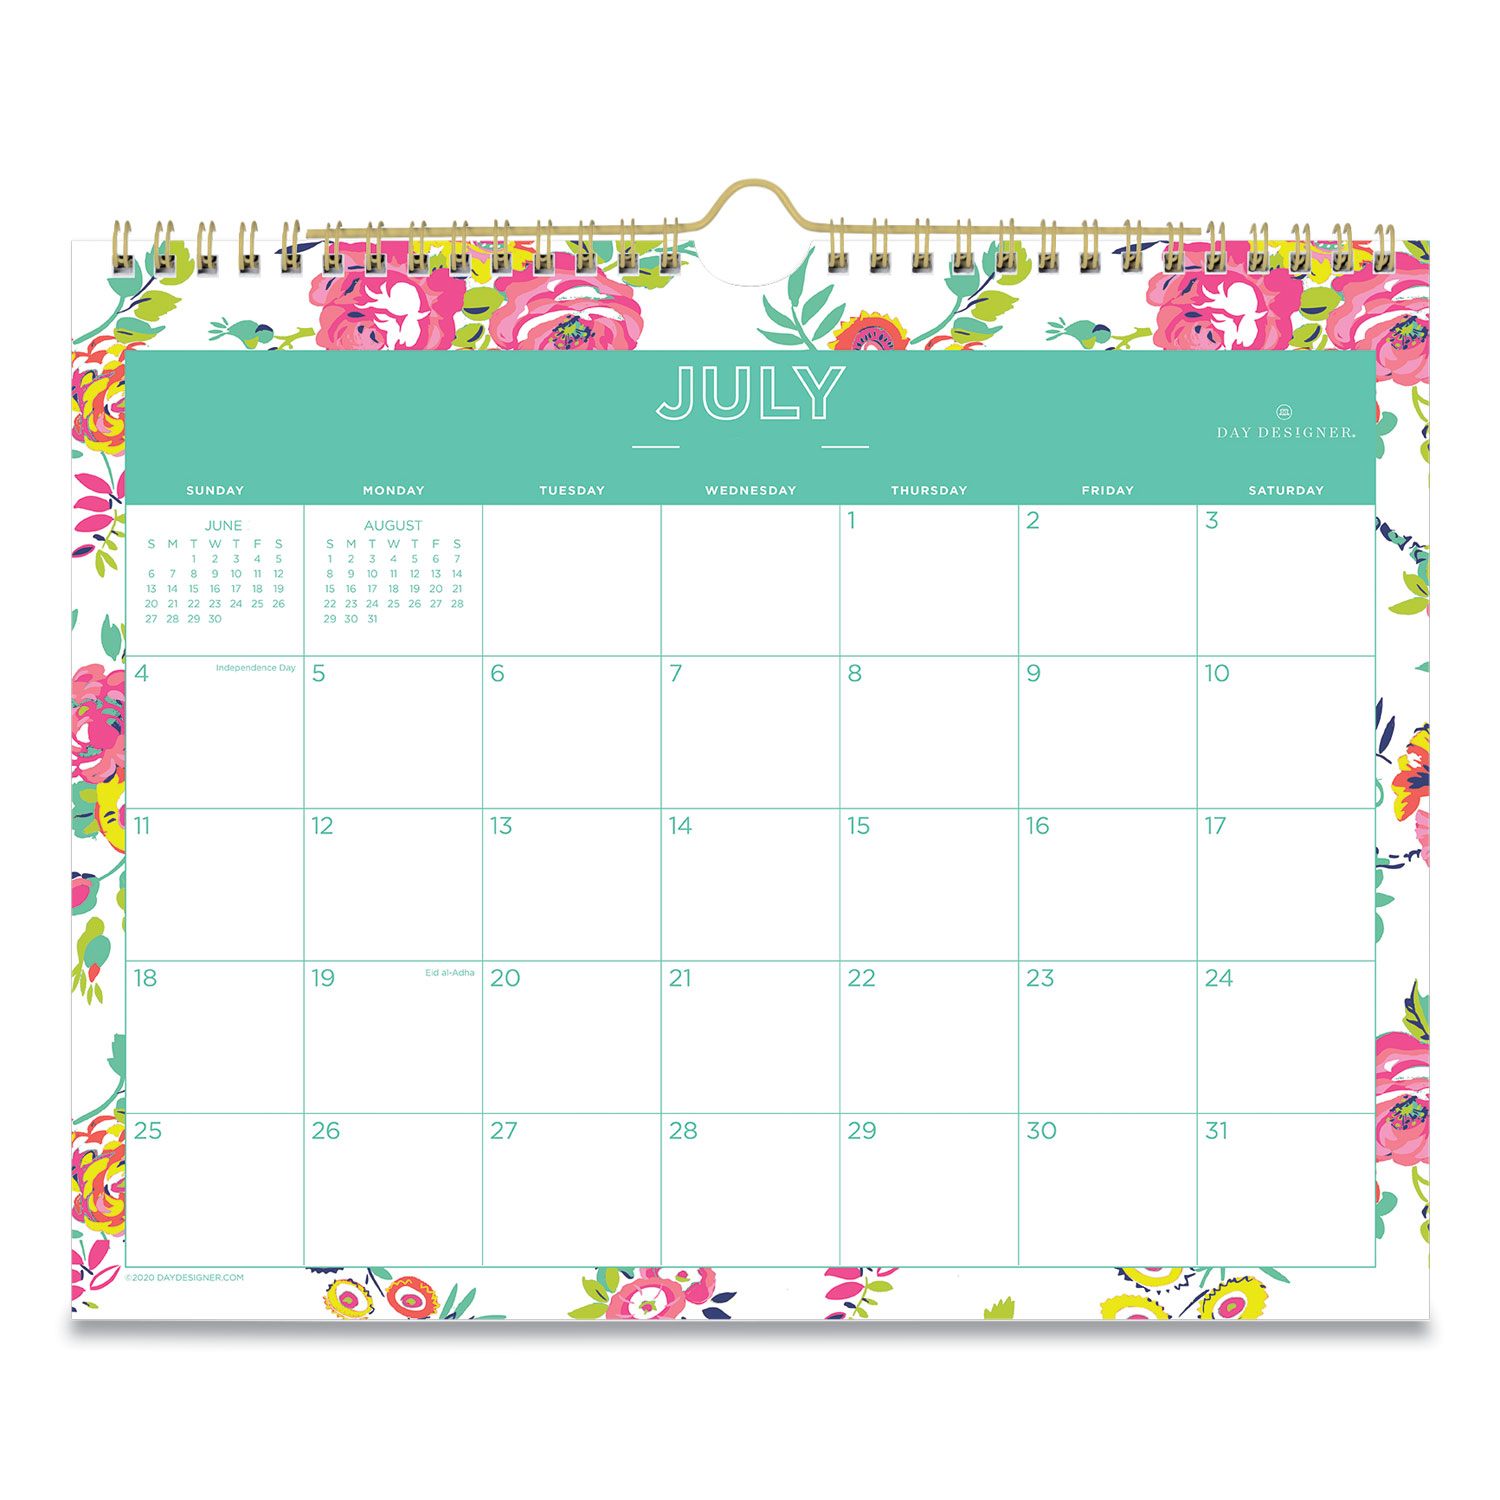 Day Designer Peyton Academic Wall Calendar, Floral Artwork, 11 x 8.75